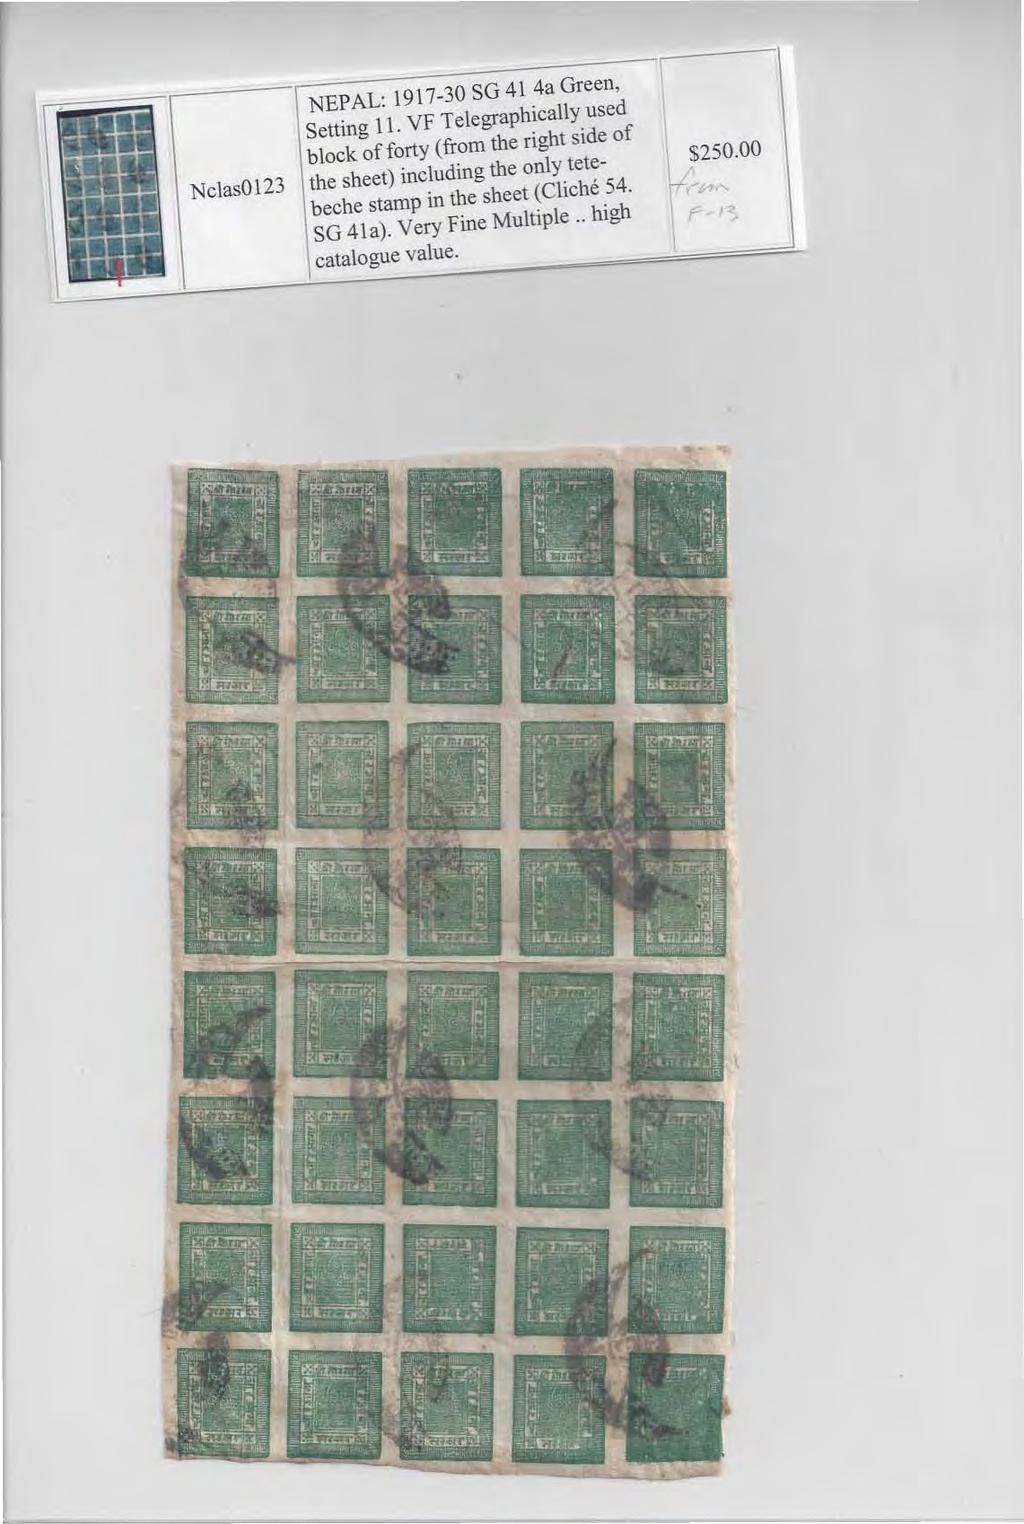 Nclas0123 NEPAL: 1917-30 SG 41 4a Green, Setting 11.